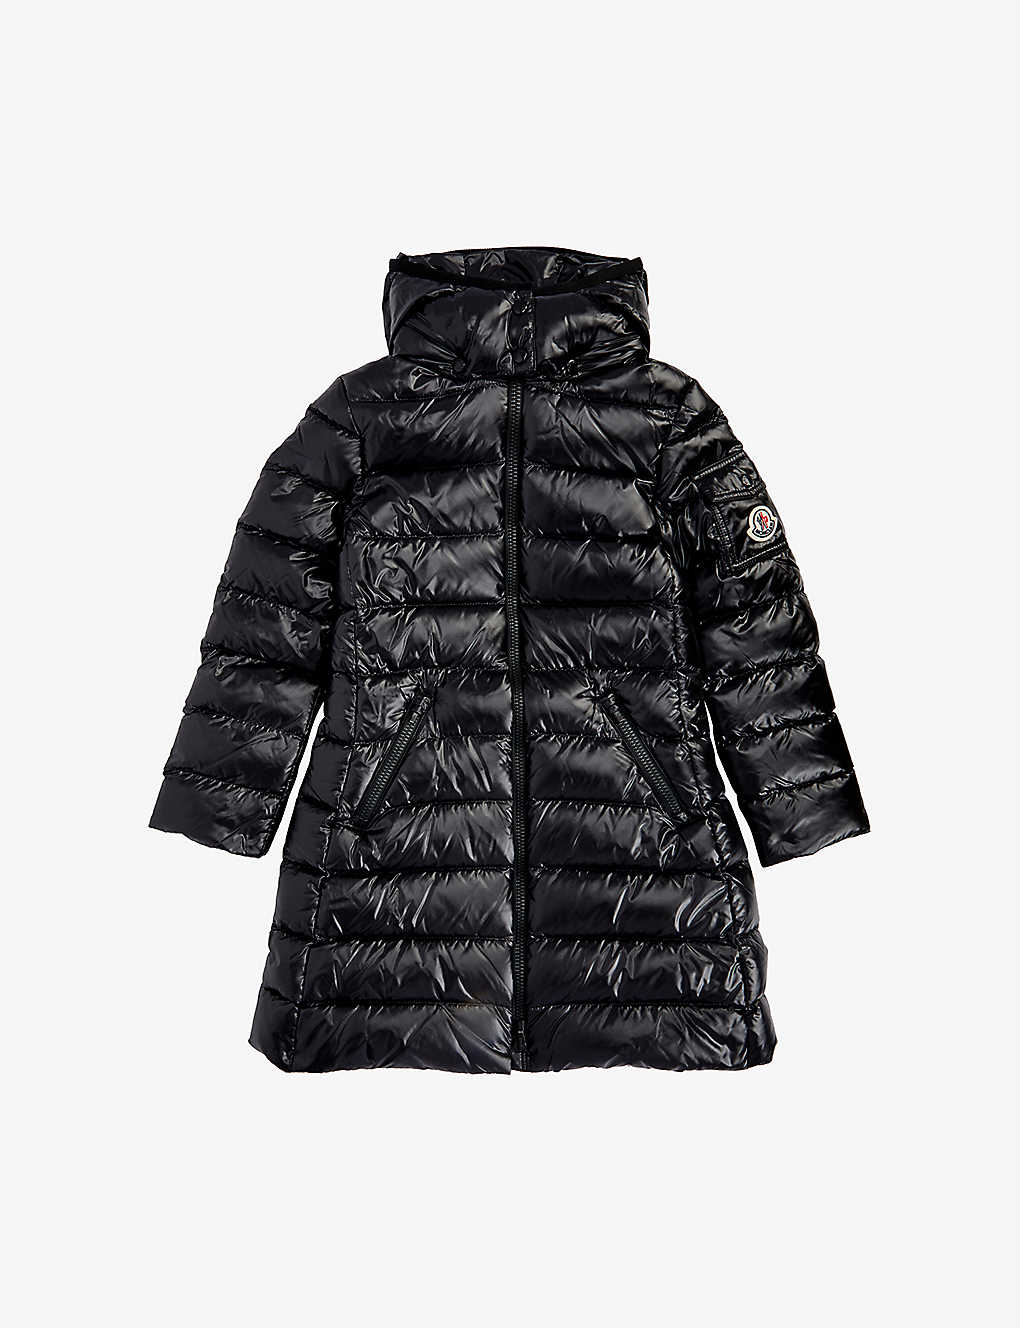 girls hooded school padded jacket coat kid resistant/proof winter children 4-14 